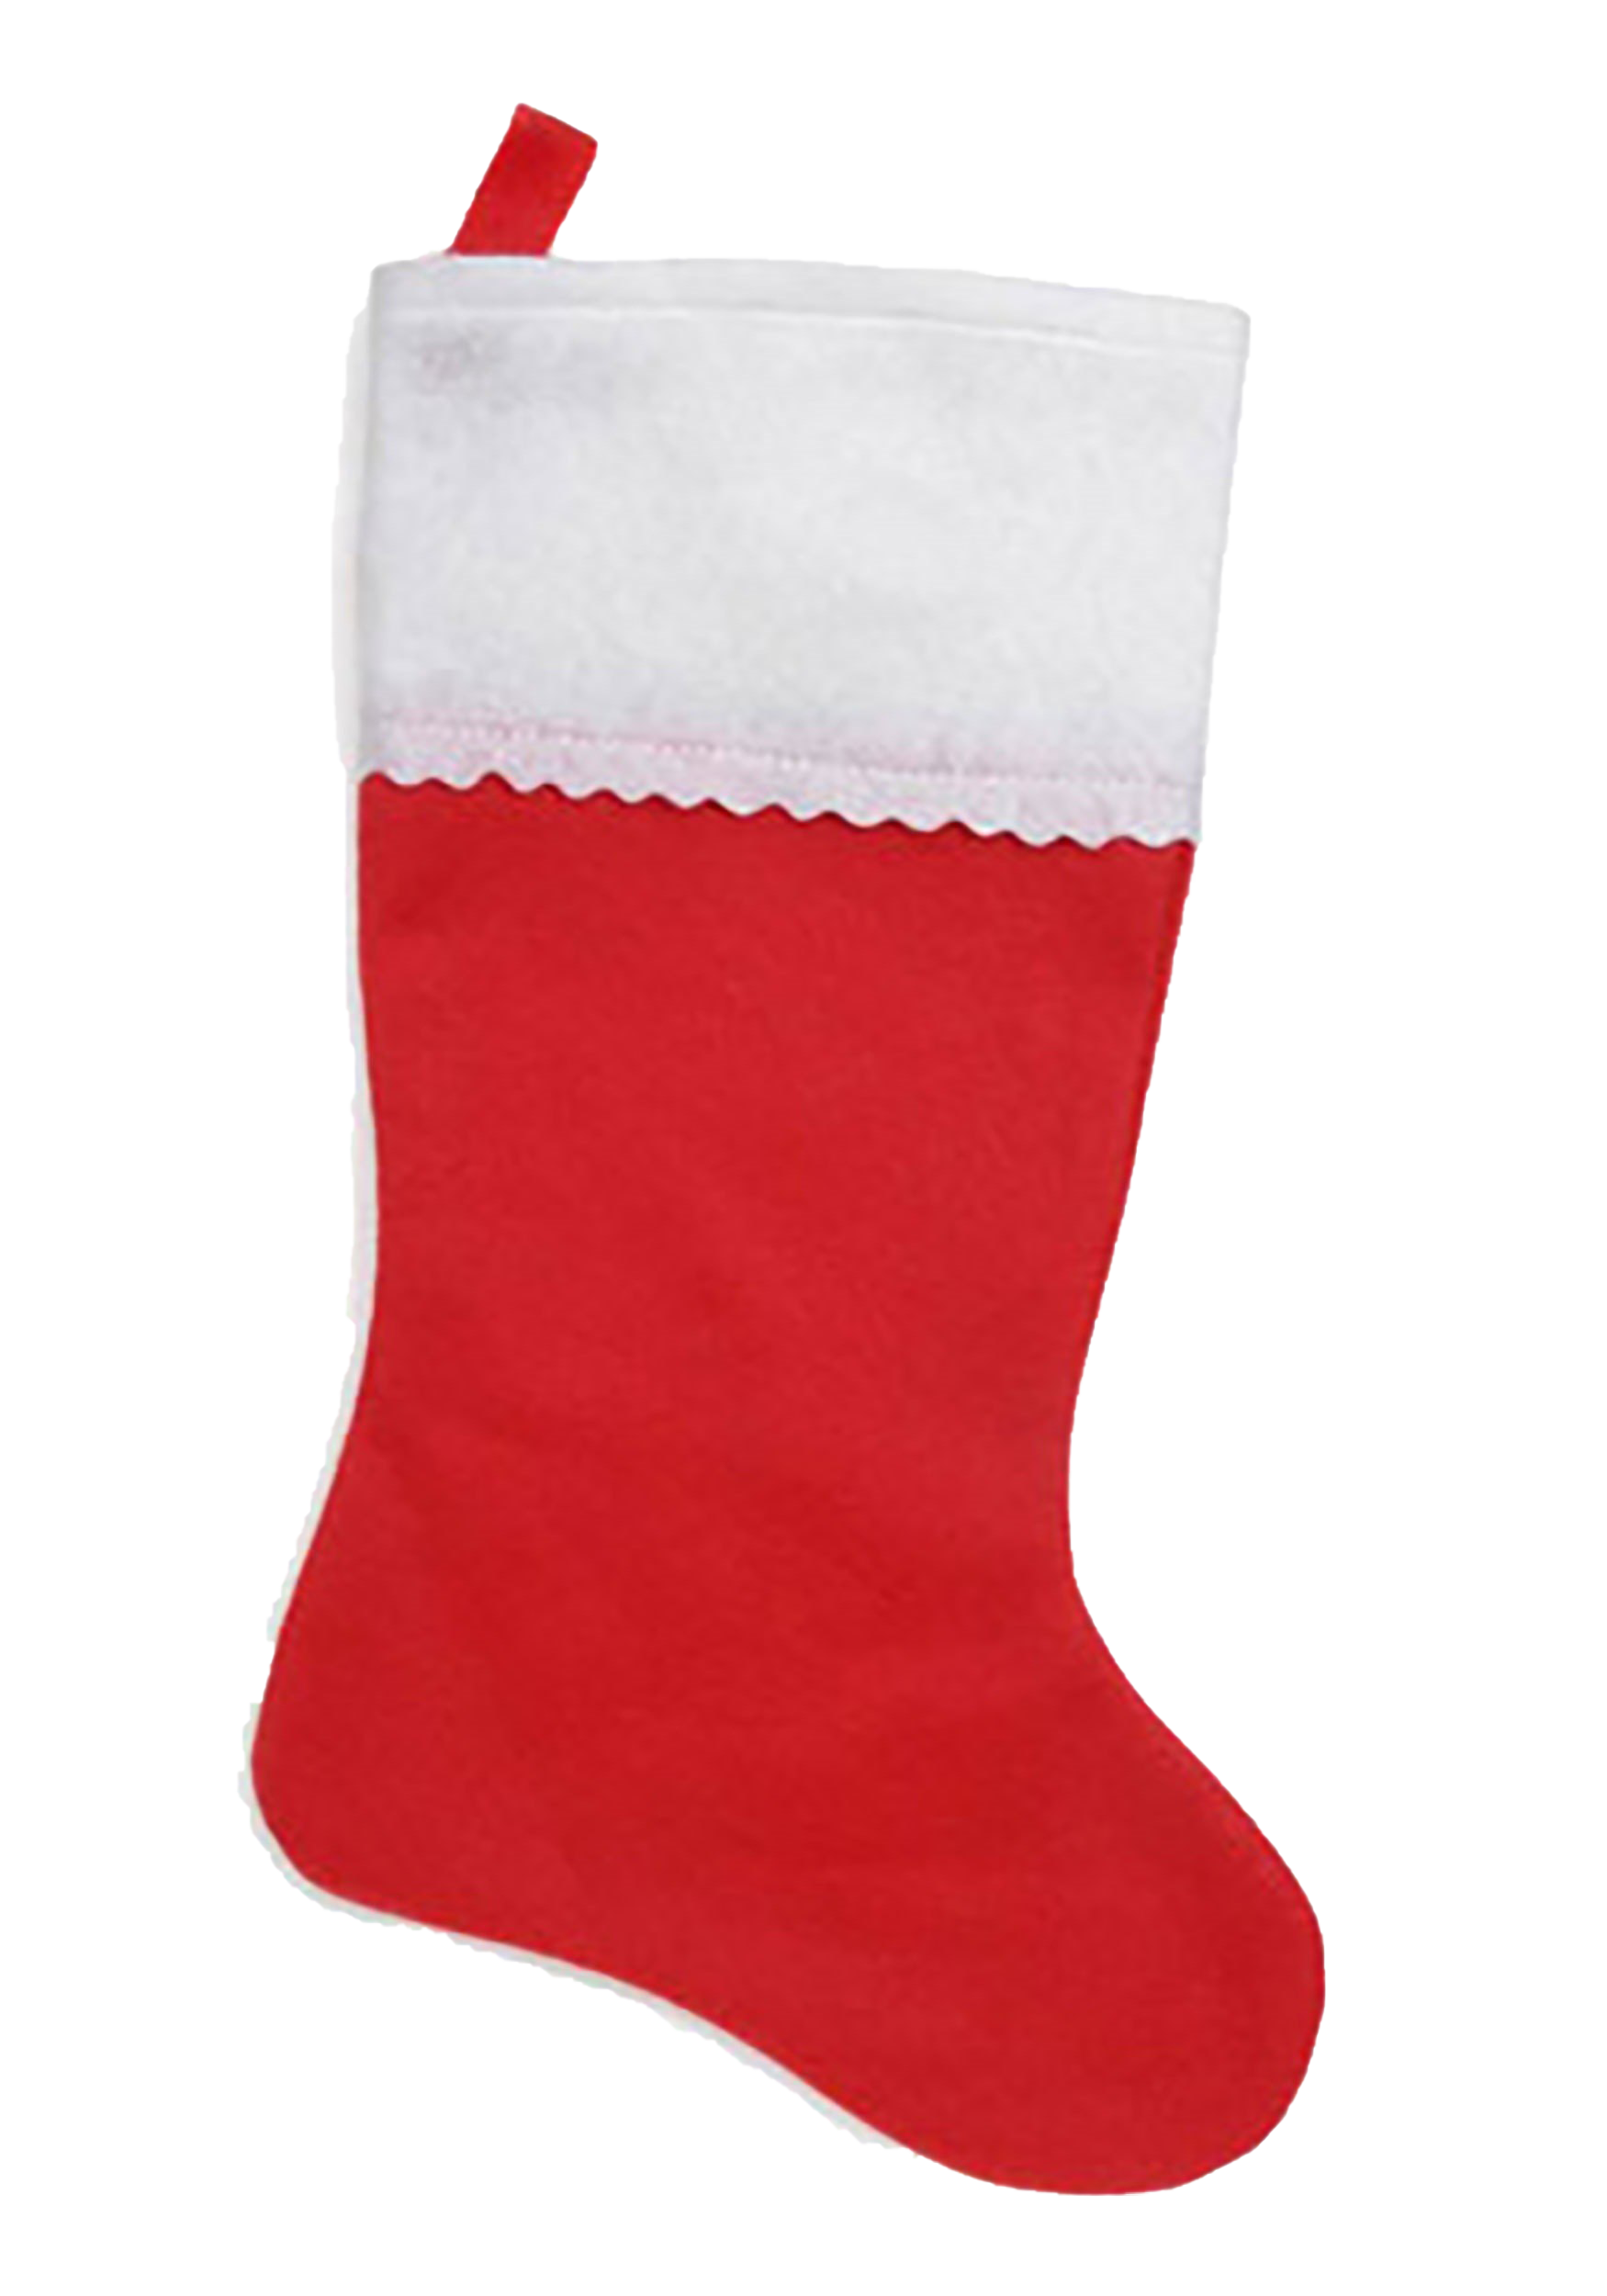 Download PNG image - Christmas Stockings PNG Image 